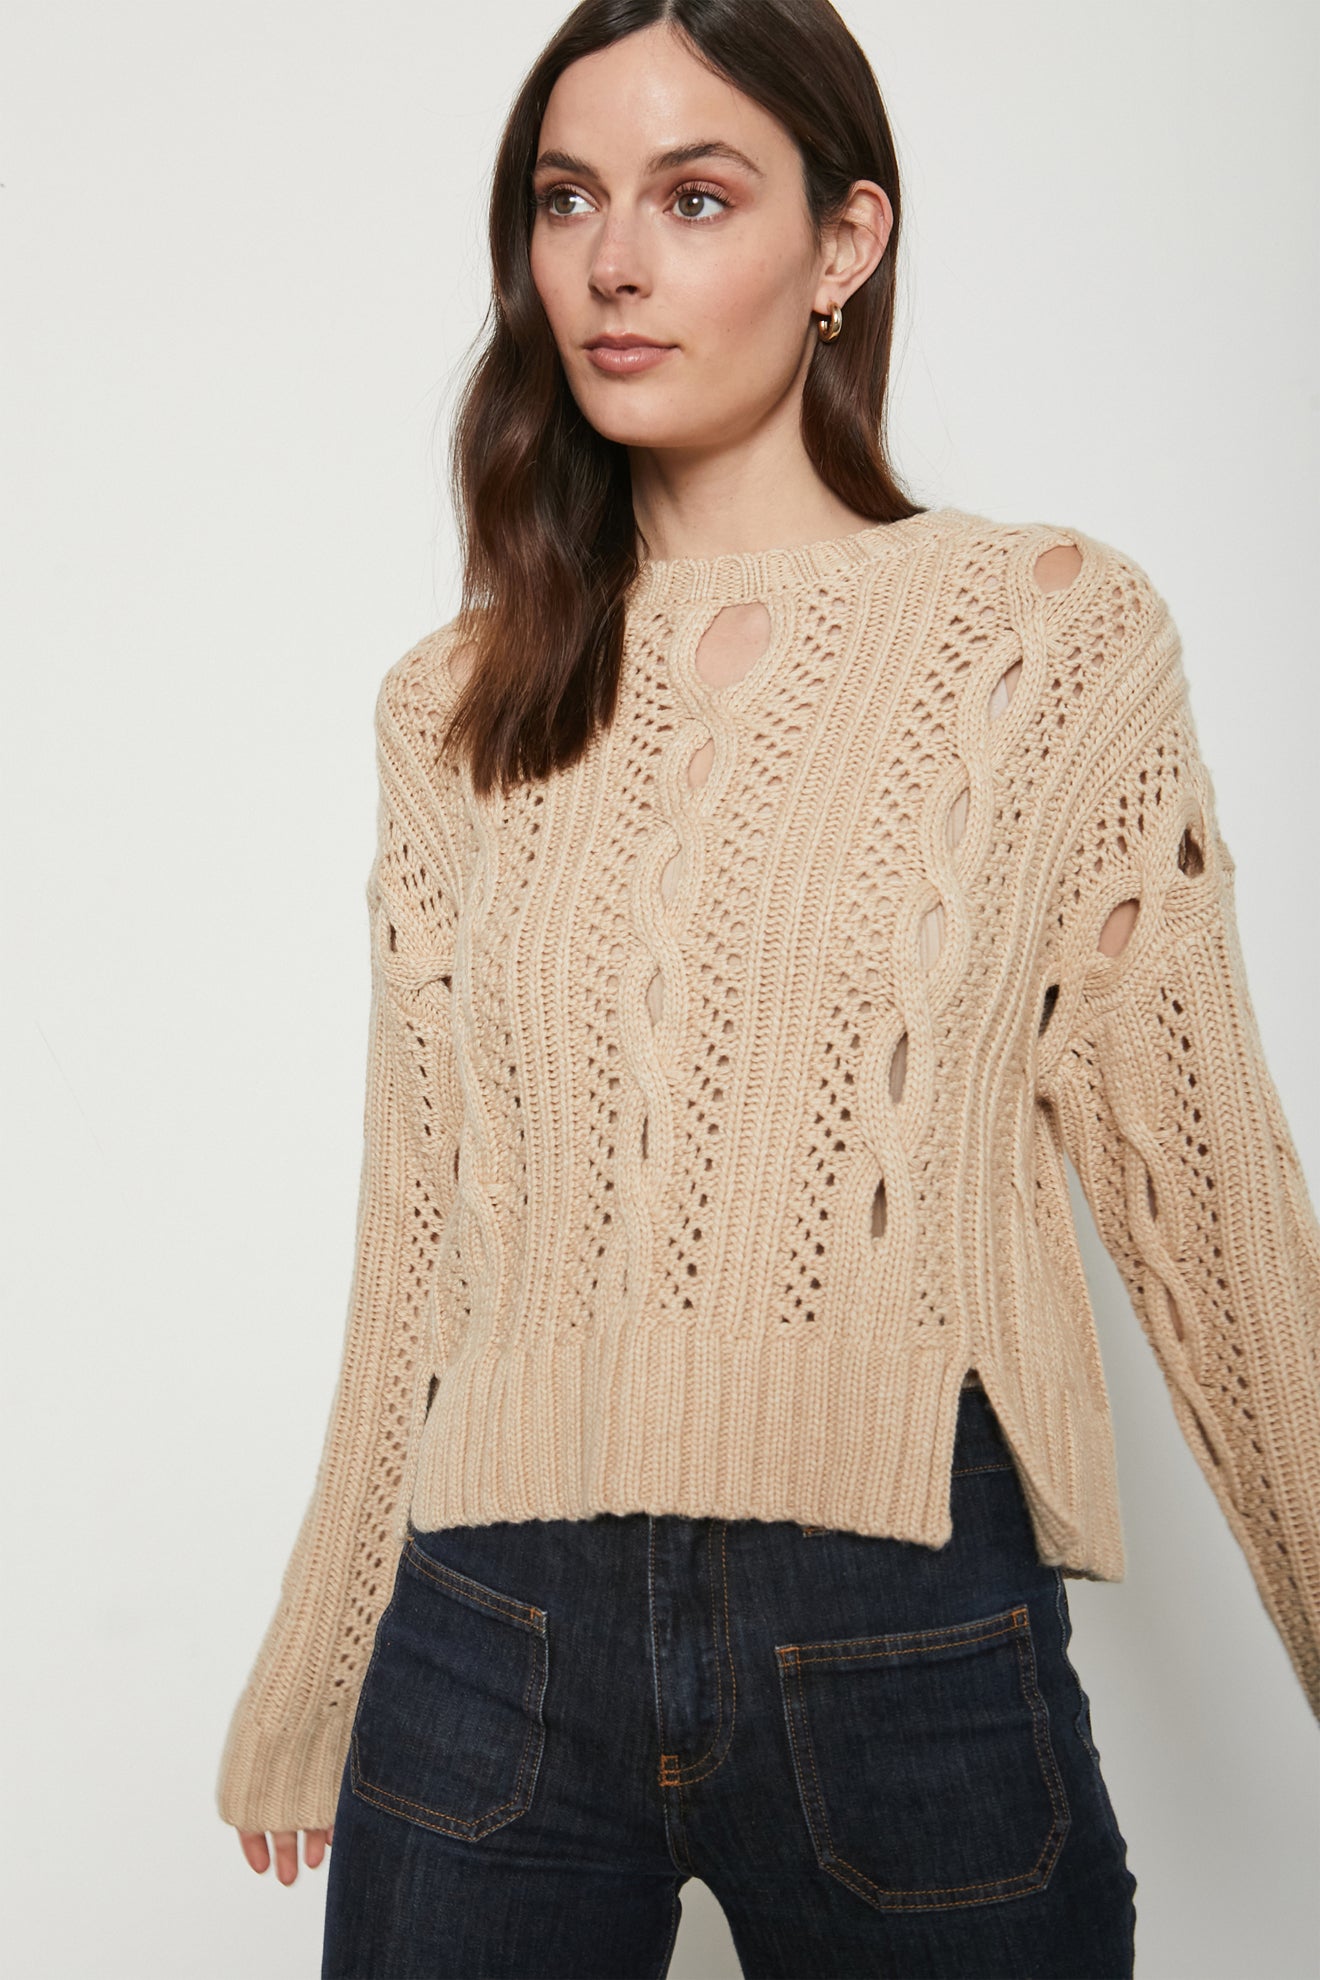 Velma Sweater Top